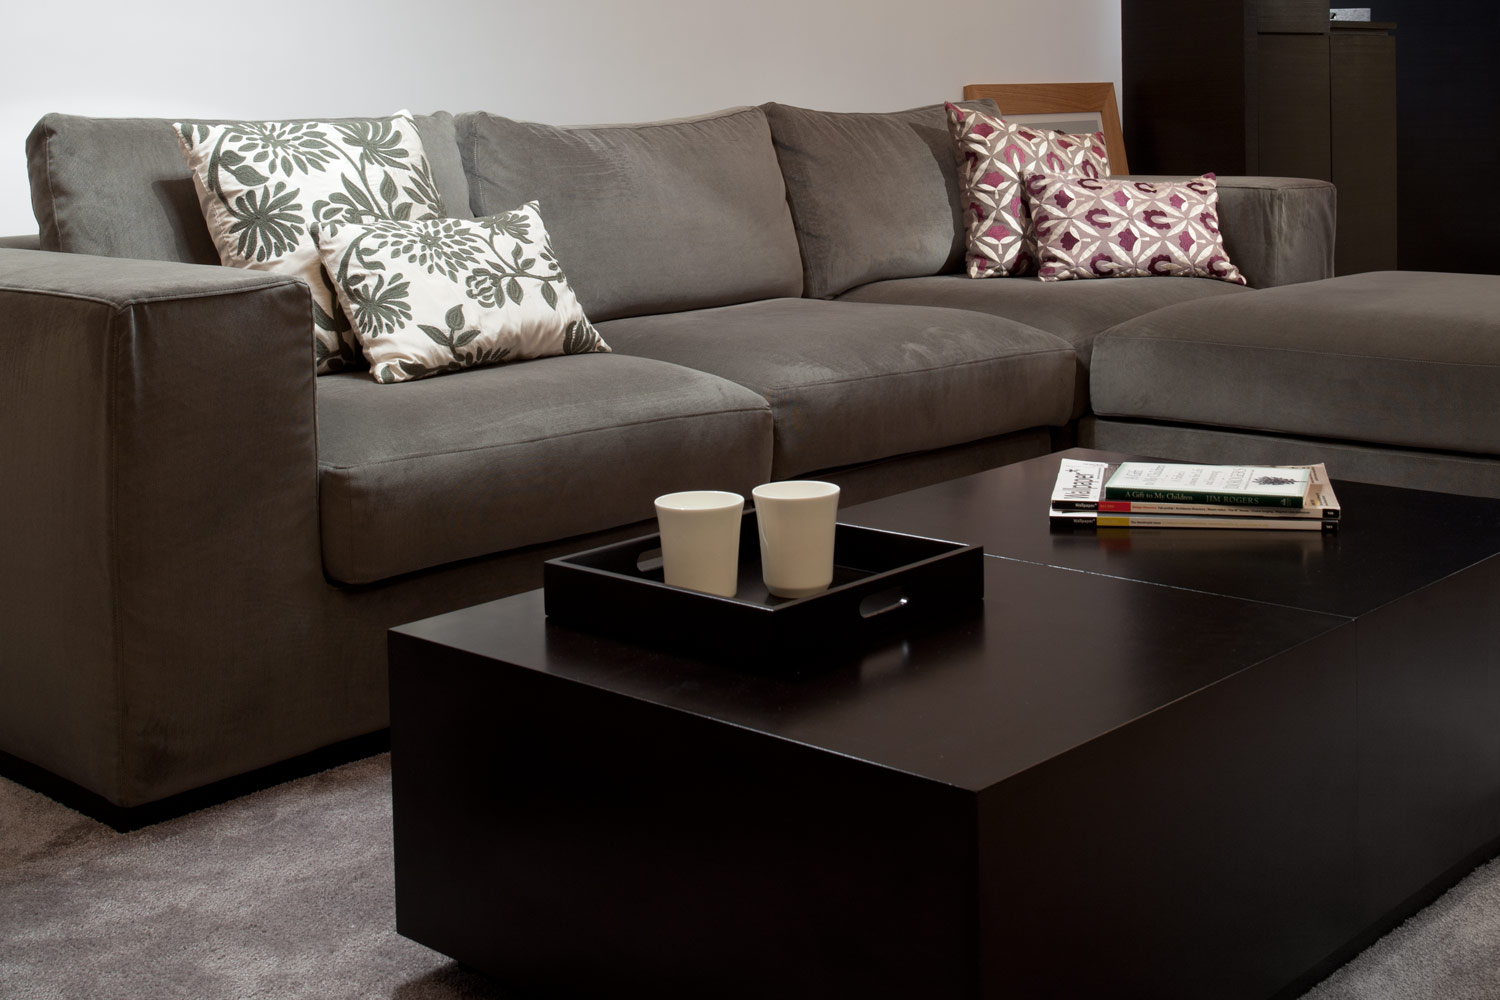 lui design associates residential interior modern apartment minimal hong kong china designer sofa couch table living room